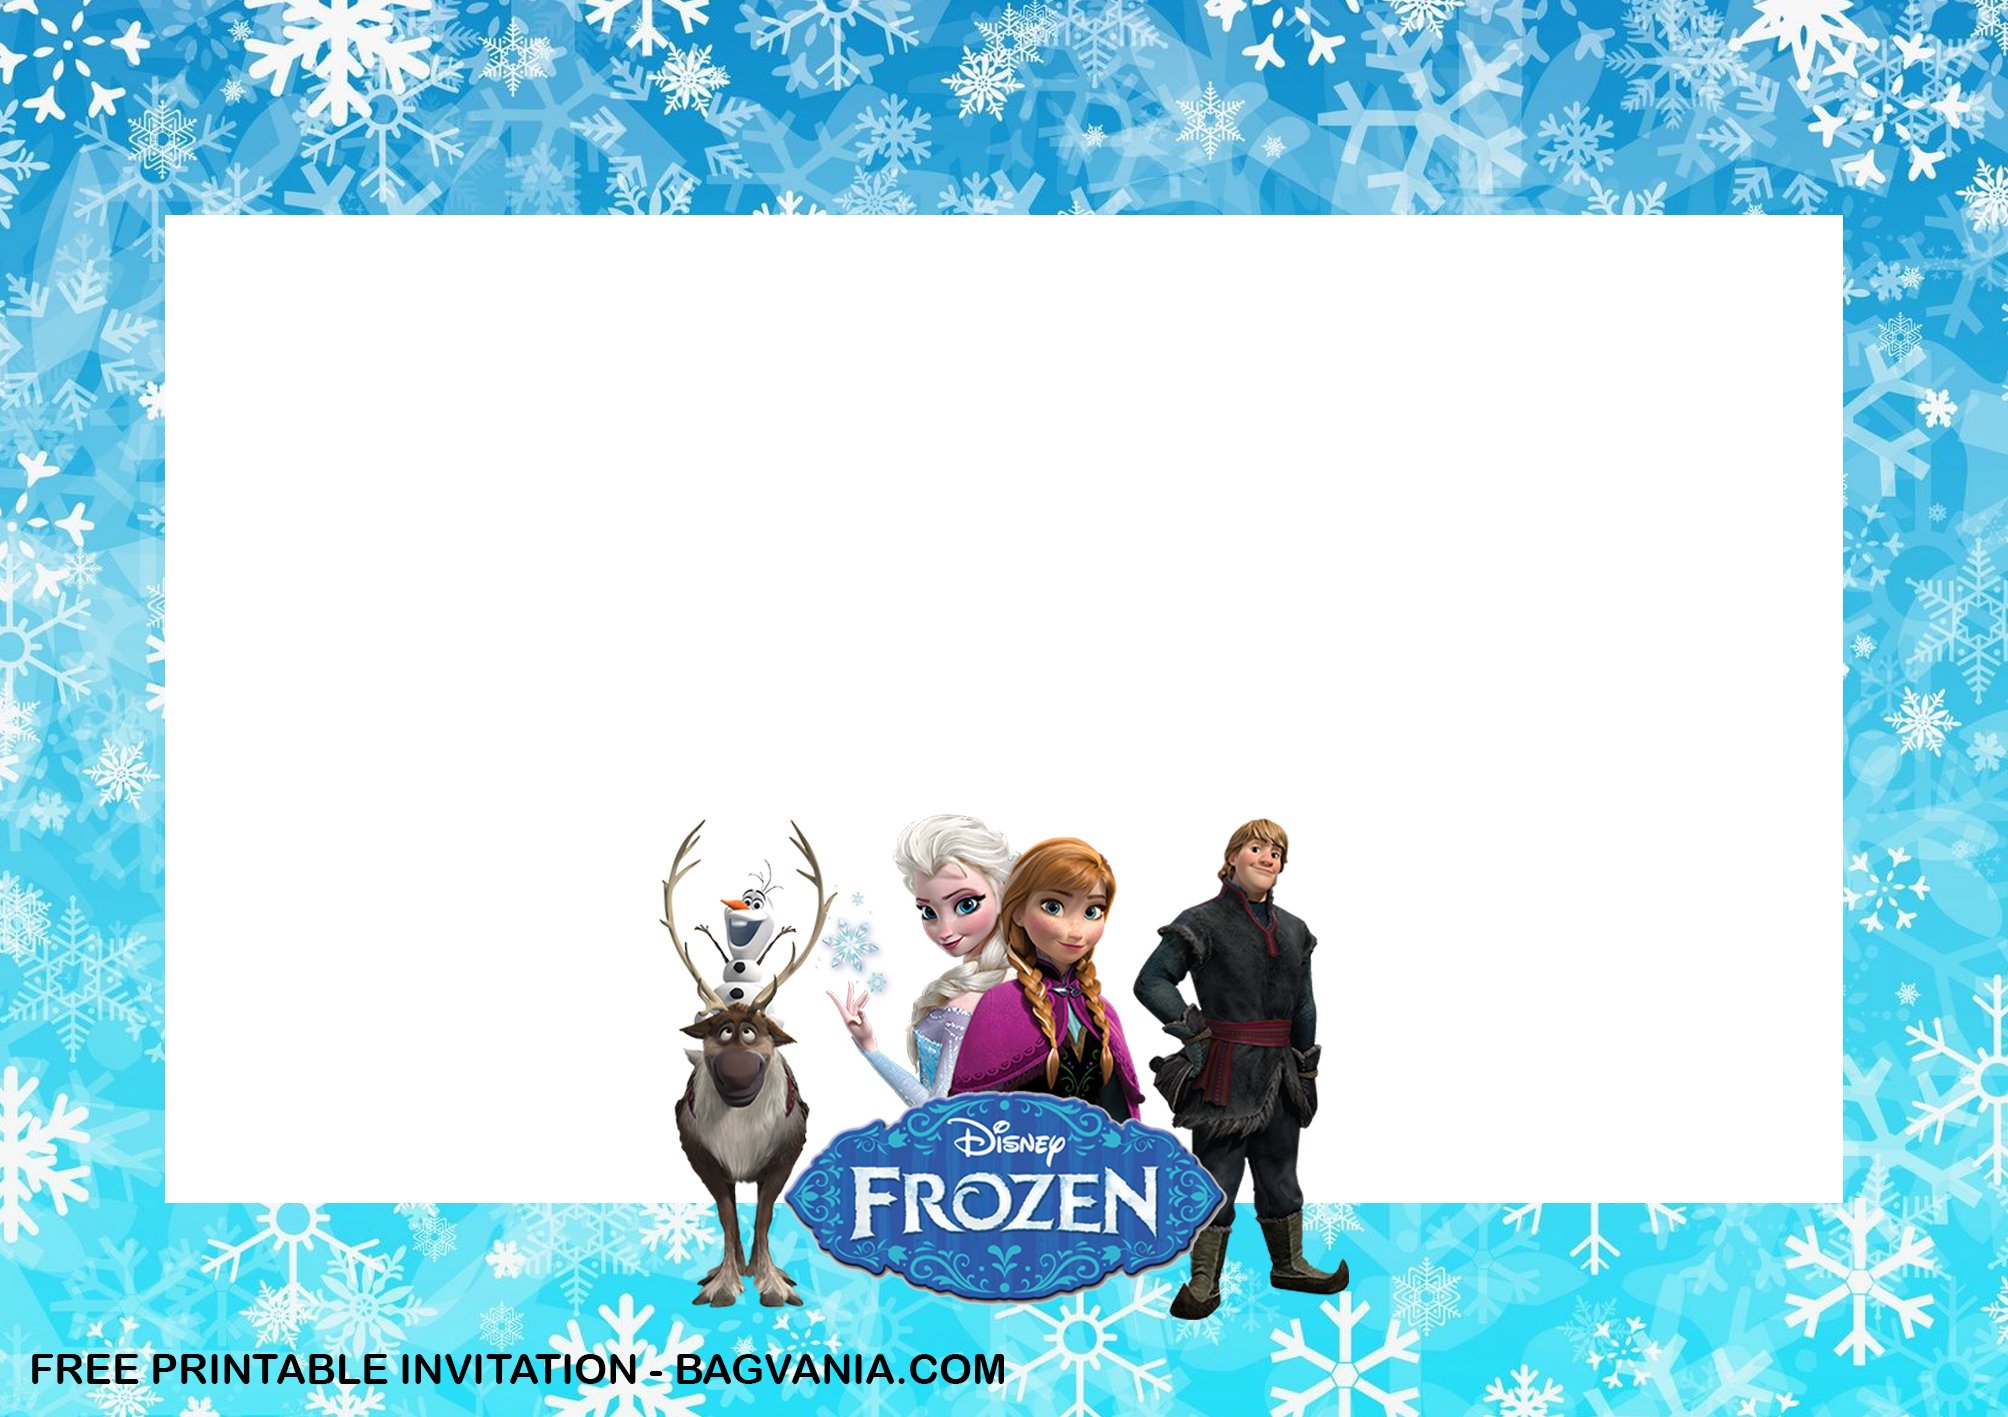 FREE Printable) – Anna and Elsa Frozen Birthday Invitation Inside Frozen Birthday Card Template